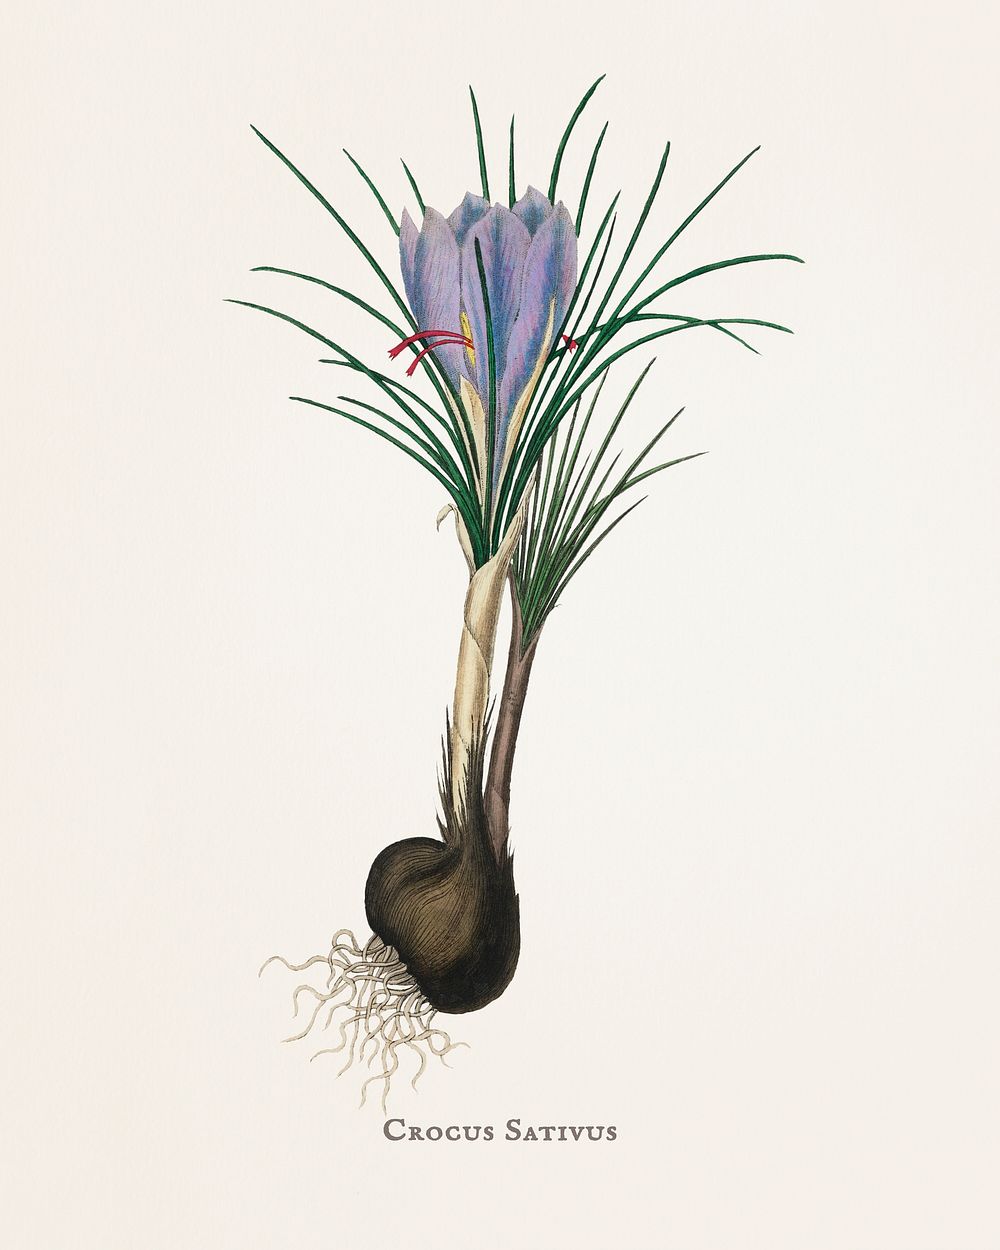 Saffron crocus (Crocus sativus) illustration from Medical Botany (1836) by John Stephenson and James Morss Churchill.